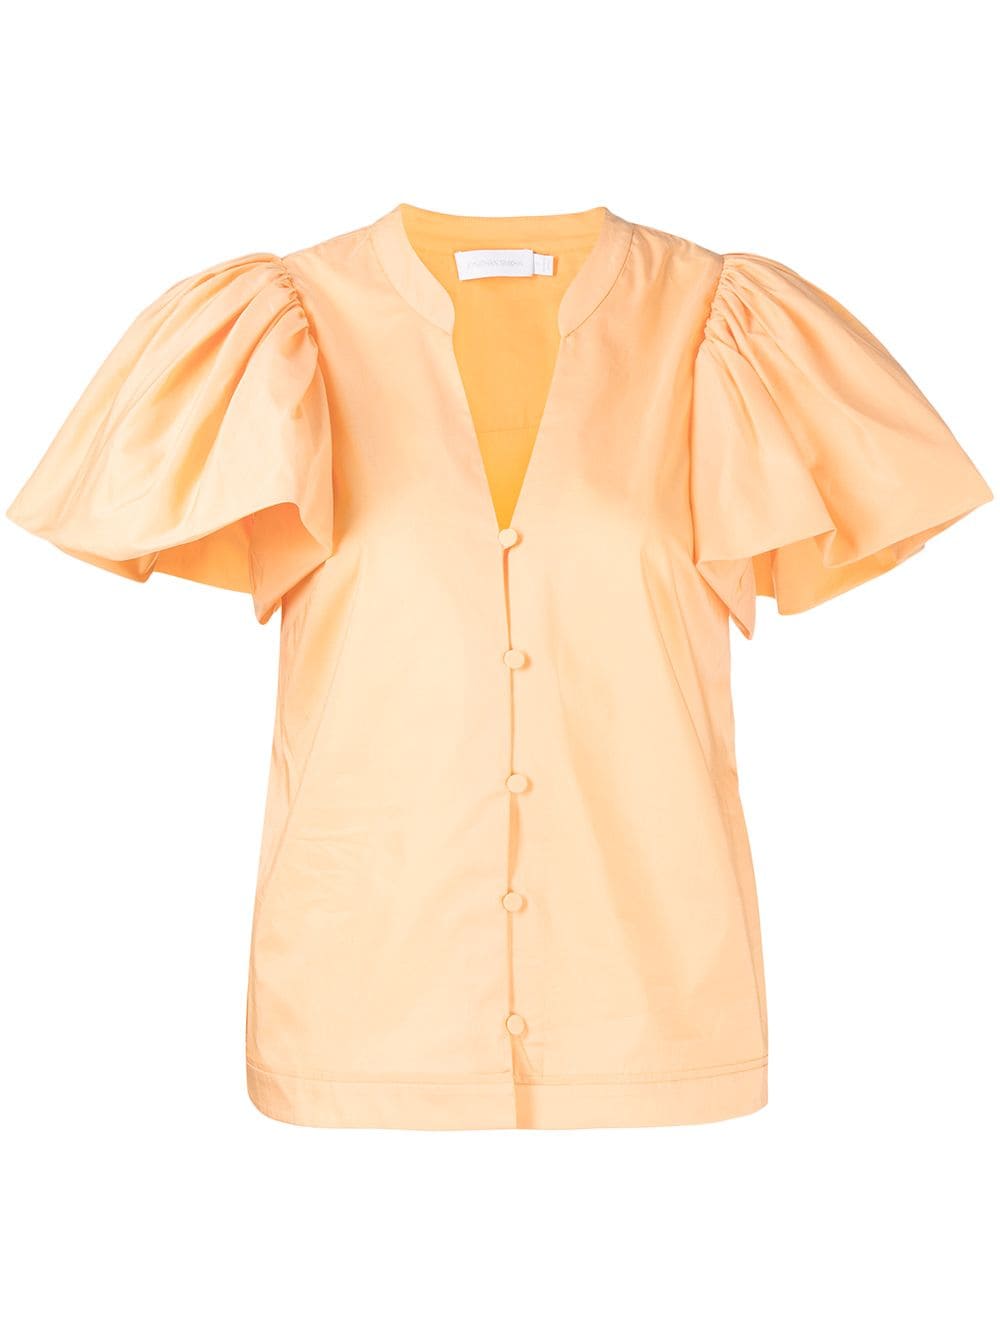 фото Jonathan simkhai блузка hallie с объемными рукавами